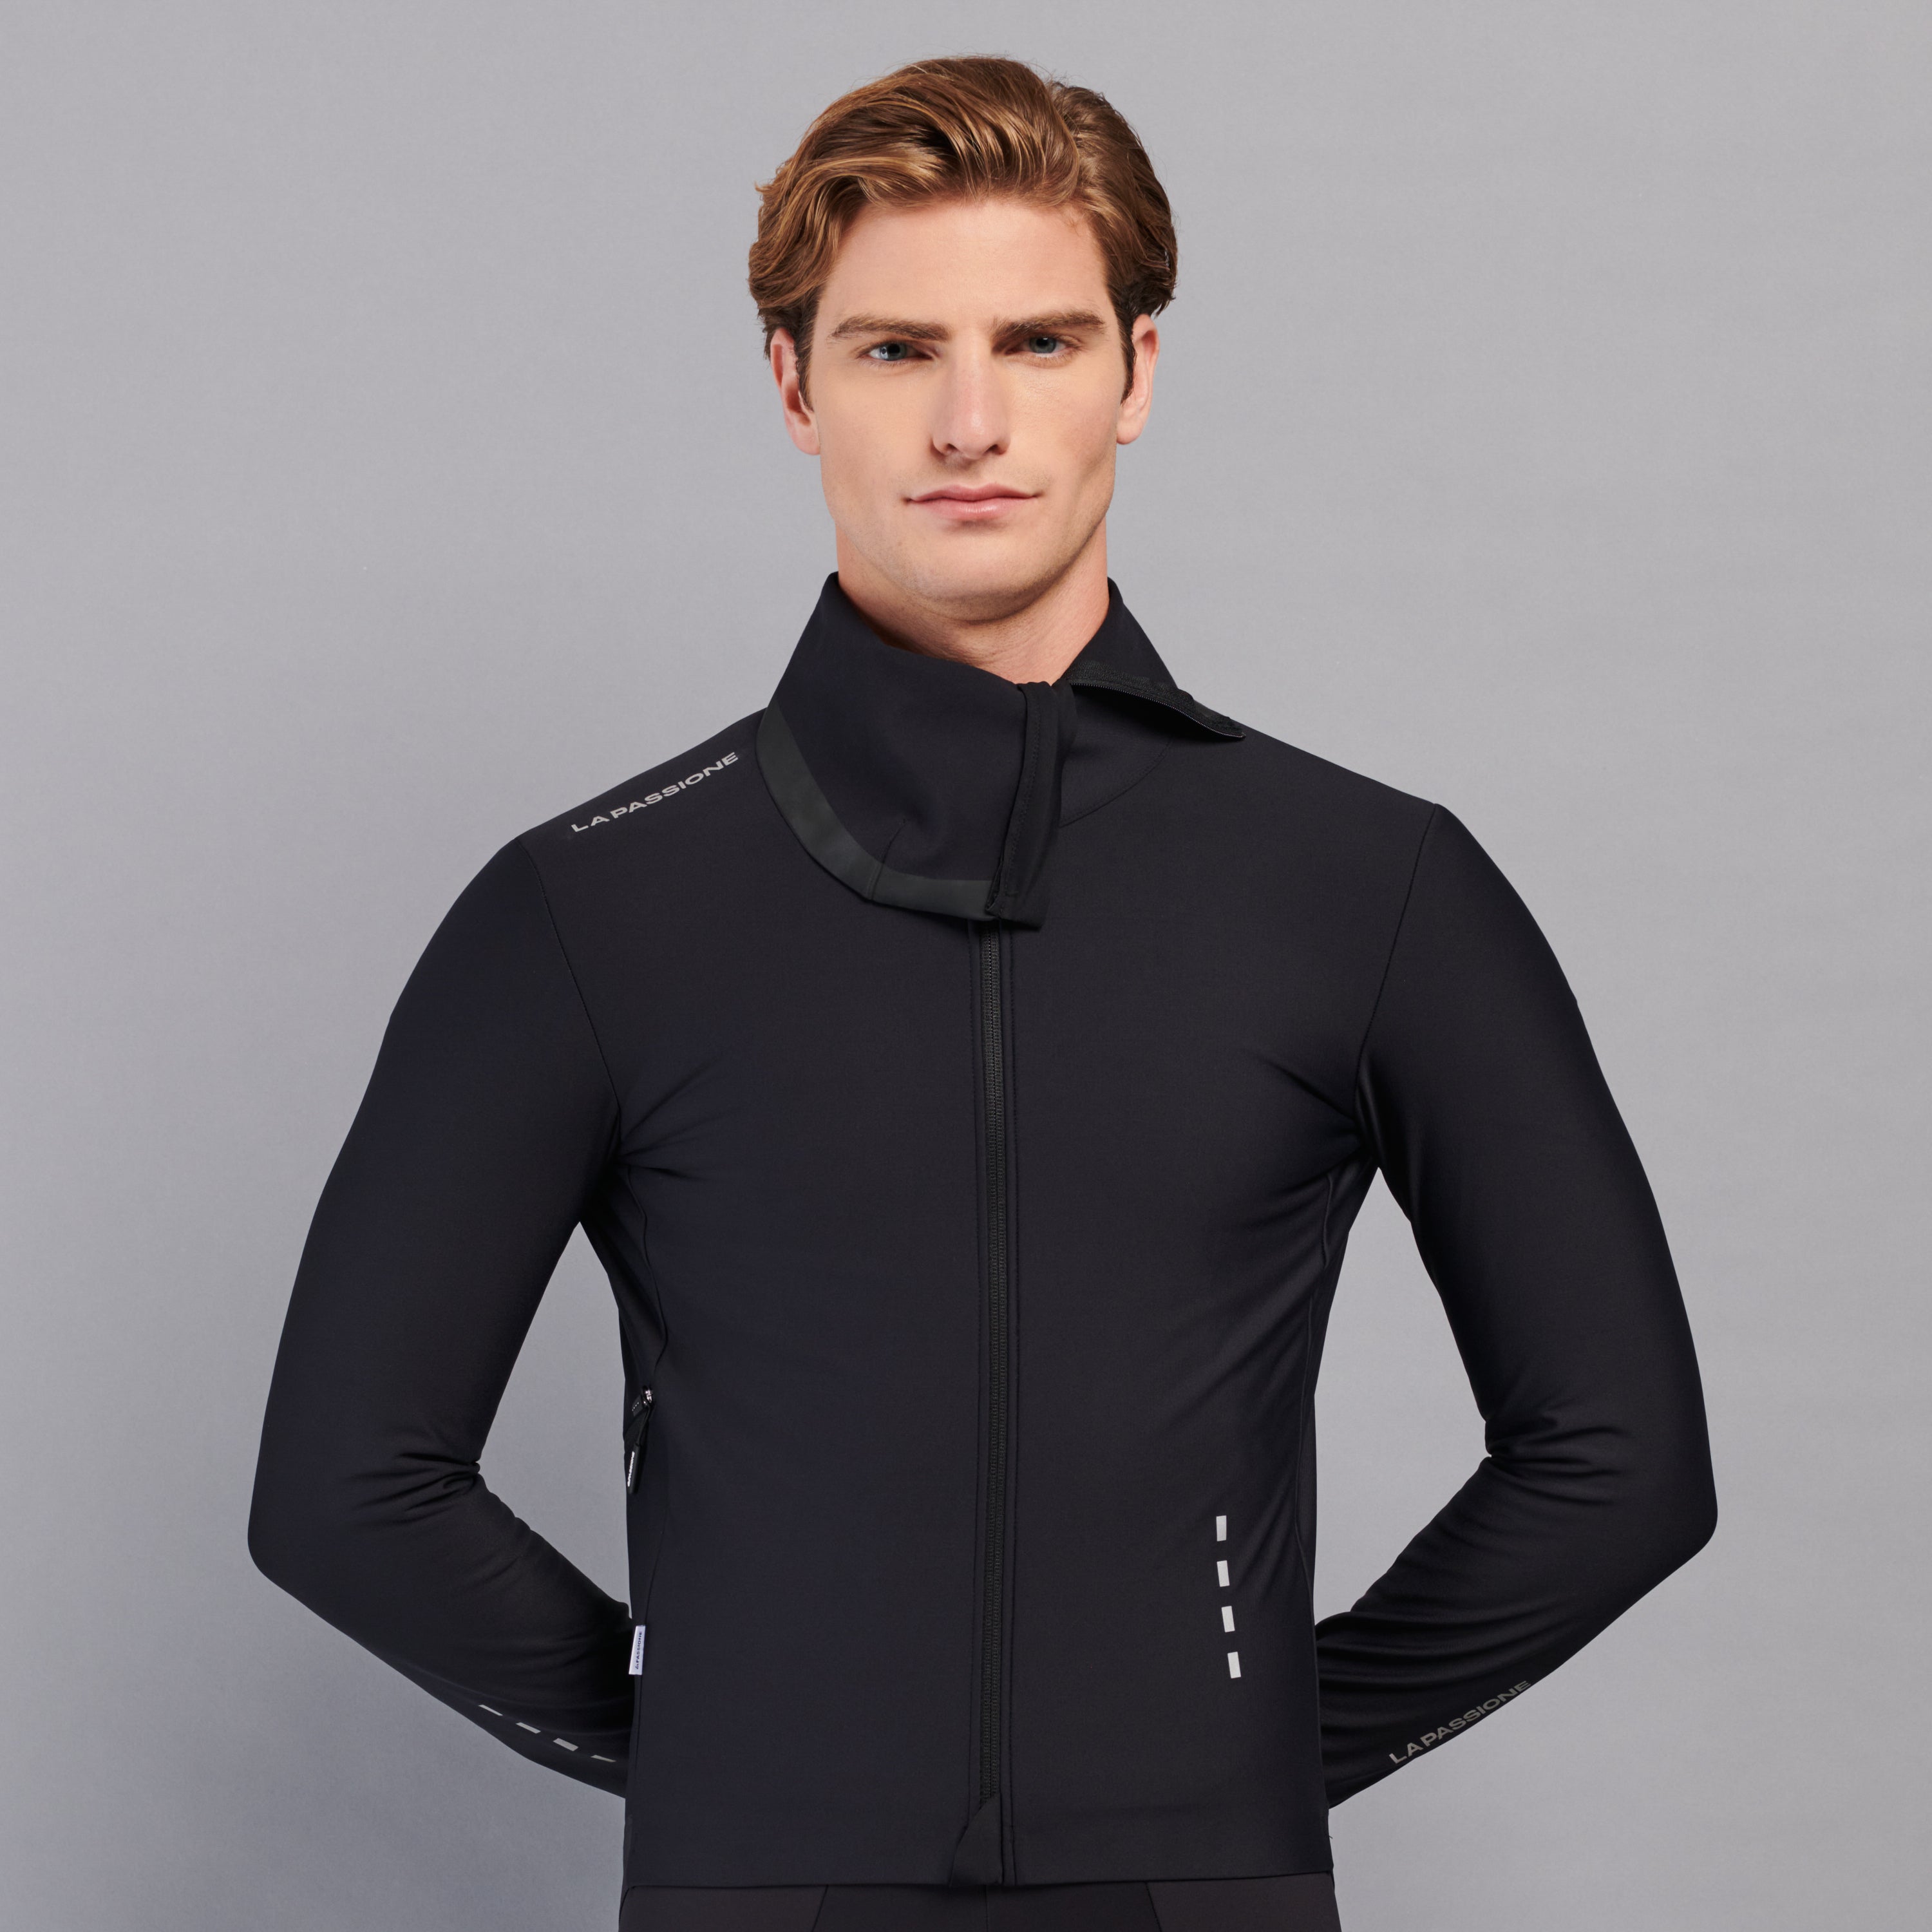 Prestige Deep Winter Jacket Black: Men's Cycling Clothing